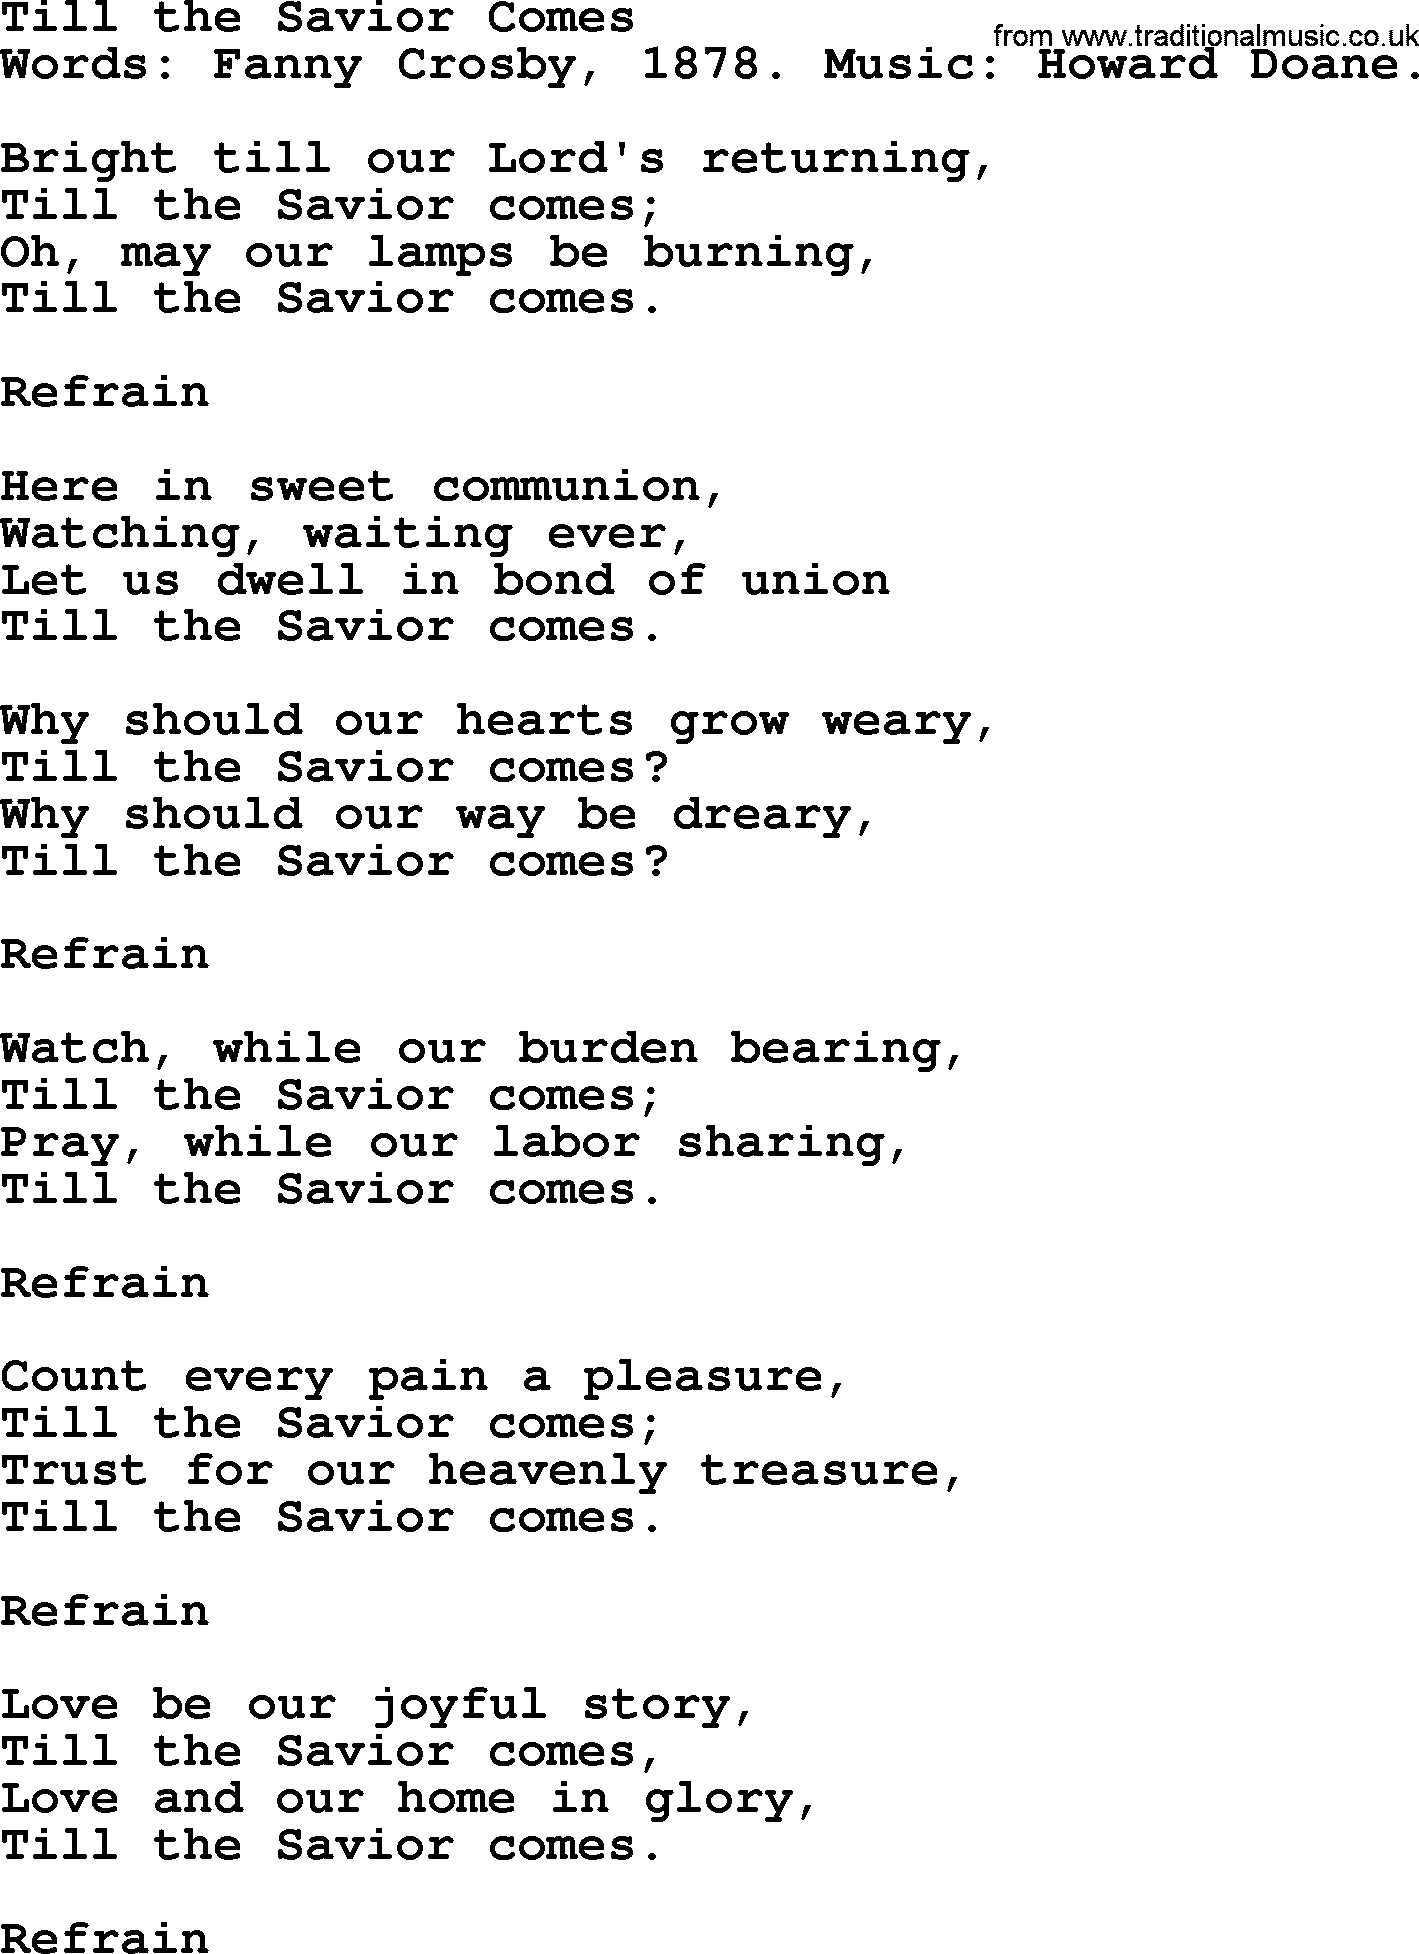 Fanny Crosby song: Till The Savior Comes, lyrics